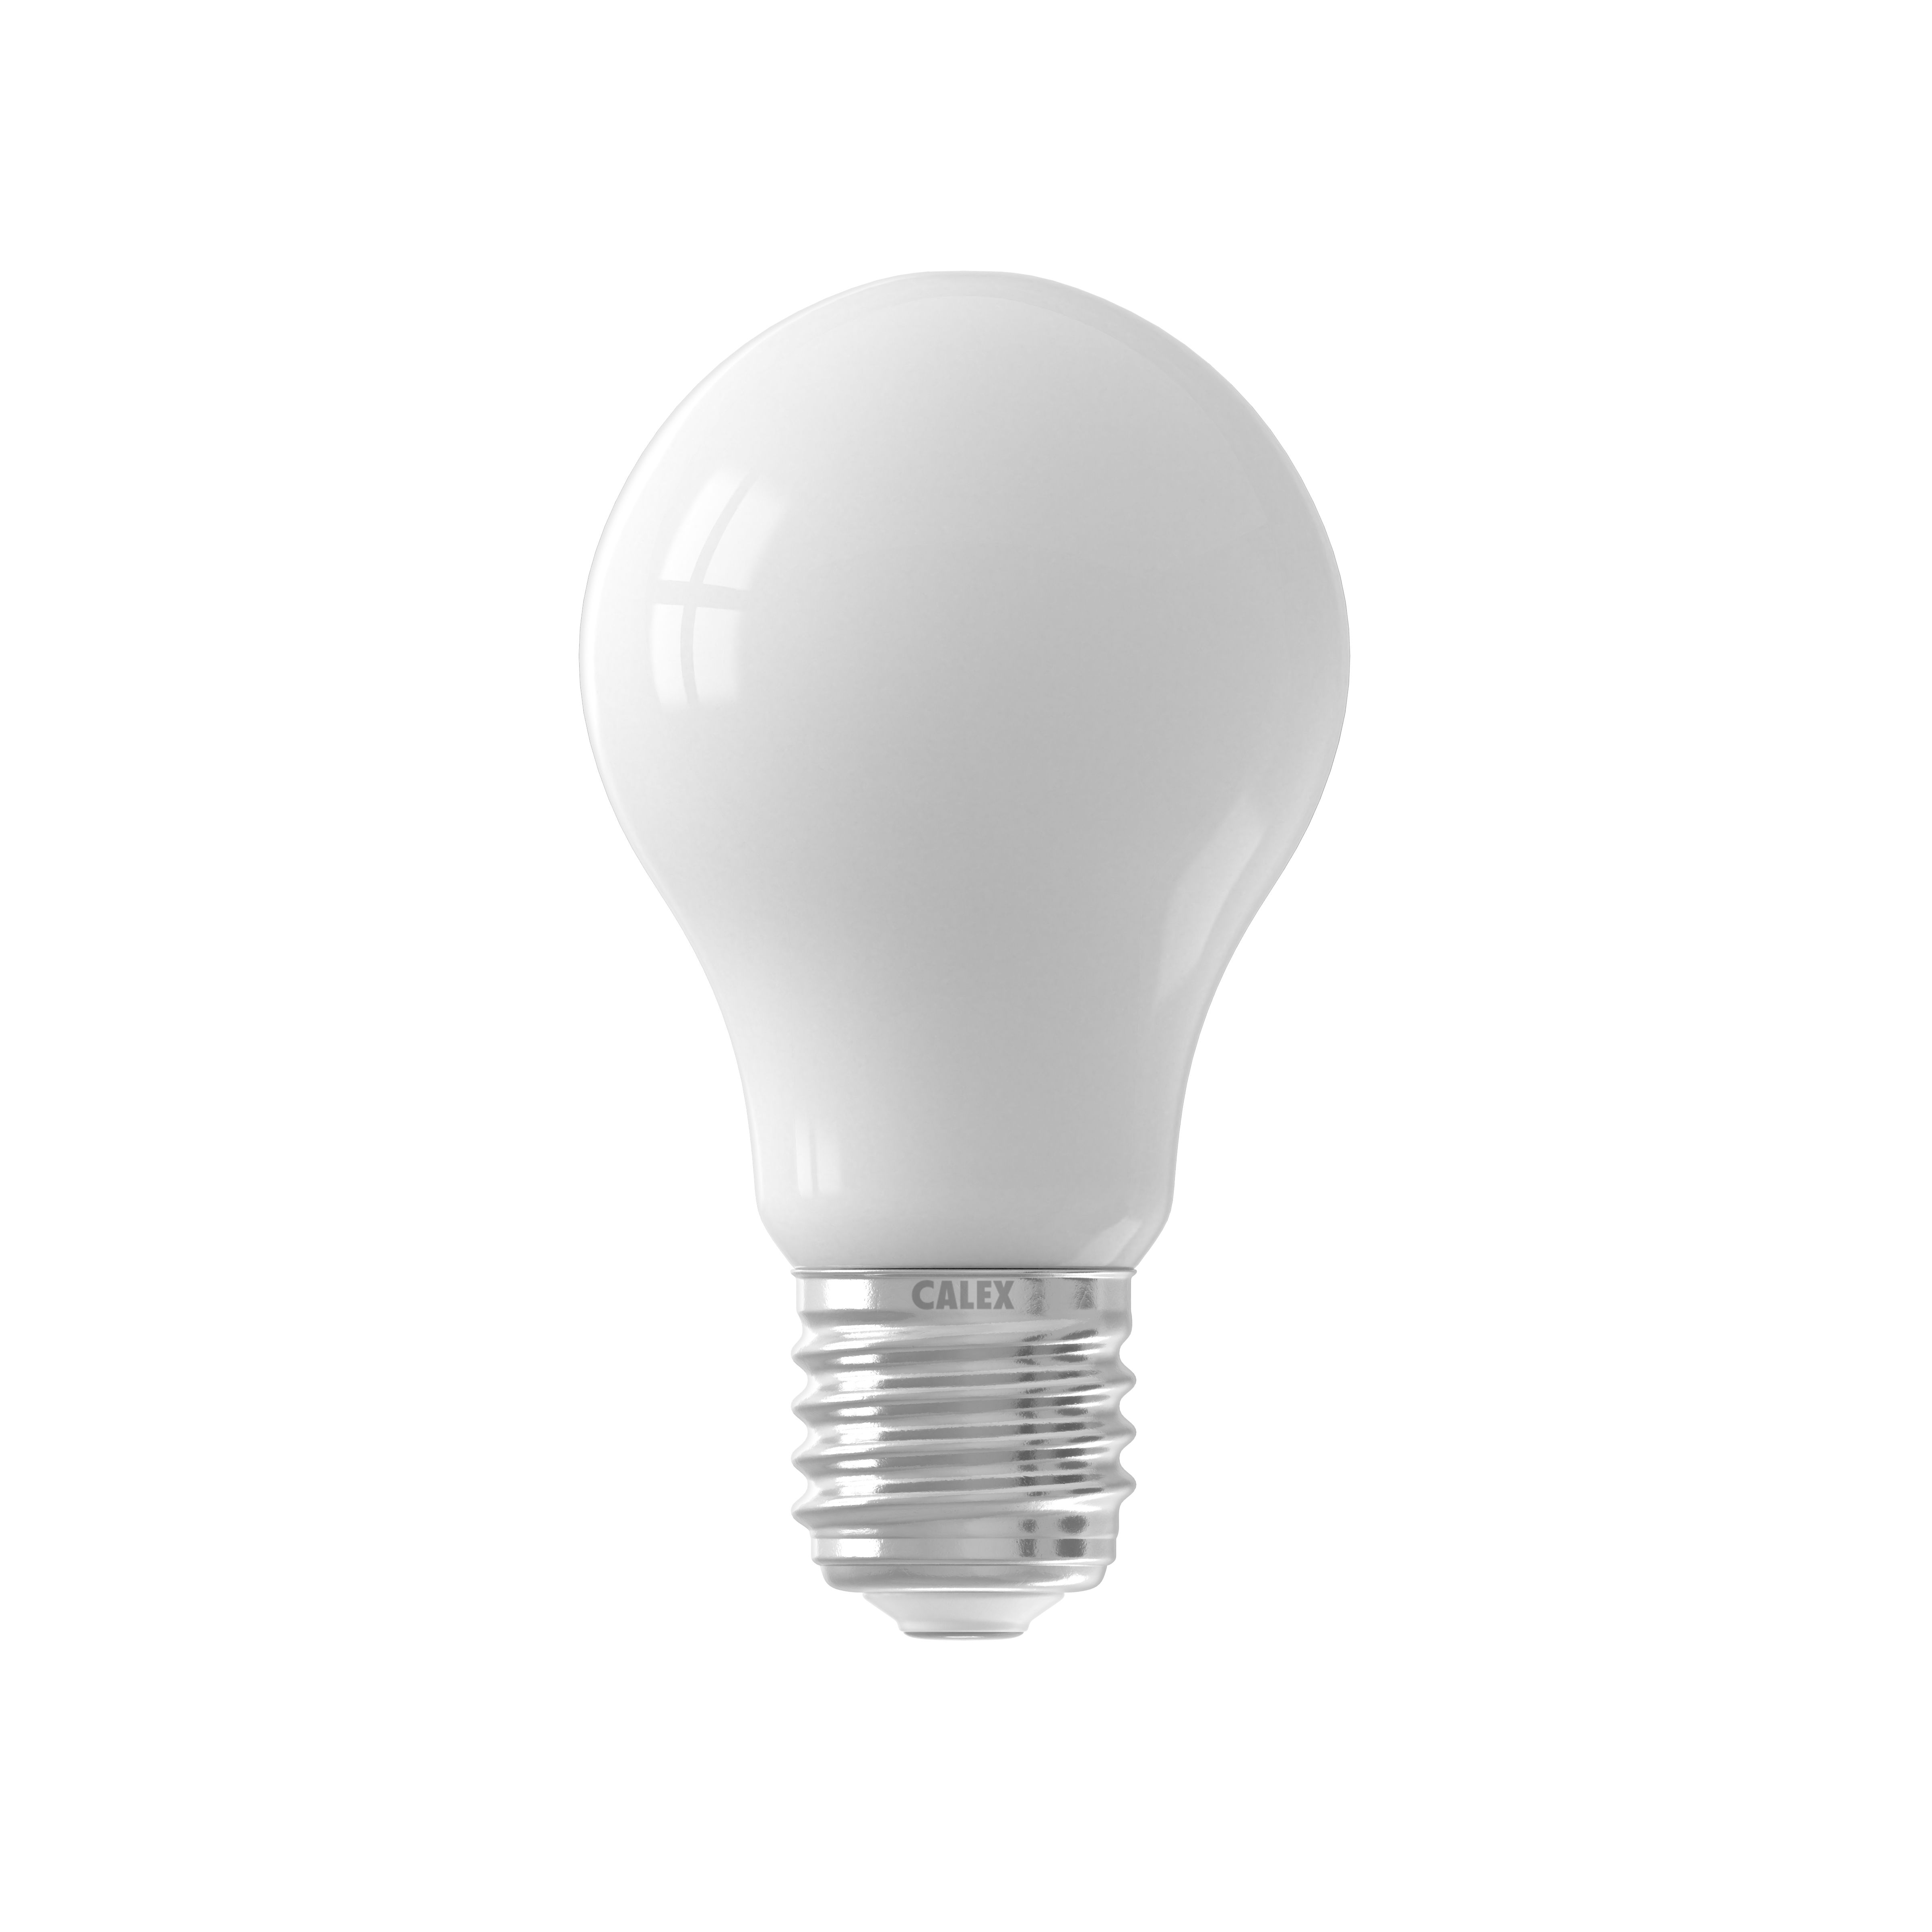 CALEX Softline E27 7W 810lm White A60 Warm white LED Dimmable Filament Light bulb